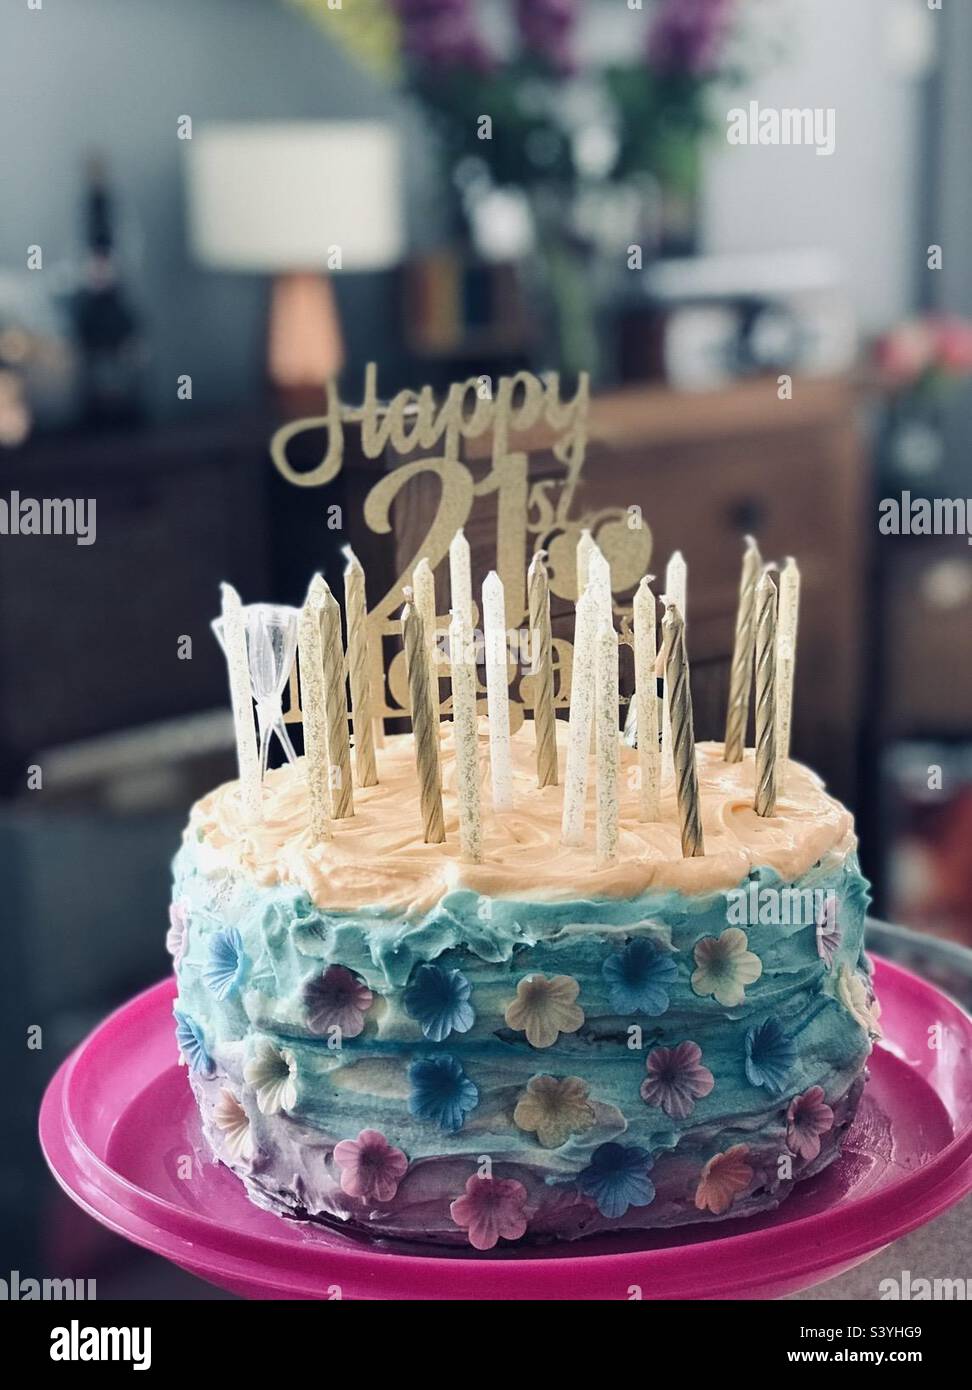 Happy 21st Birthday cake. Stock Photo